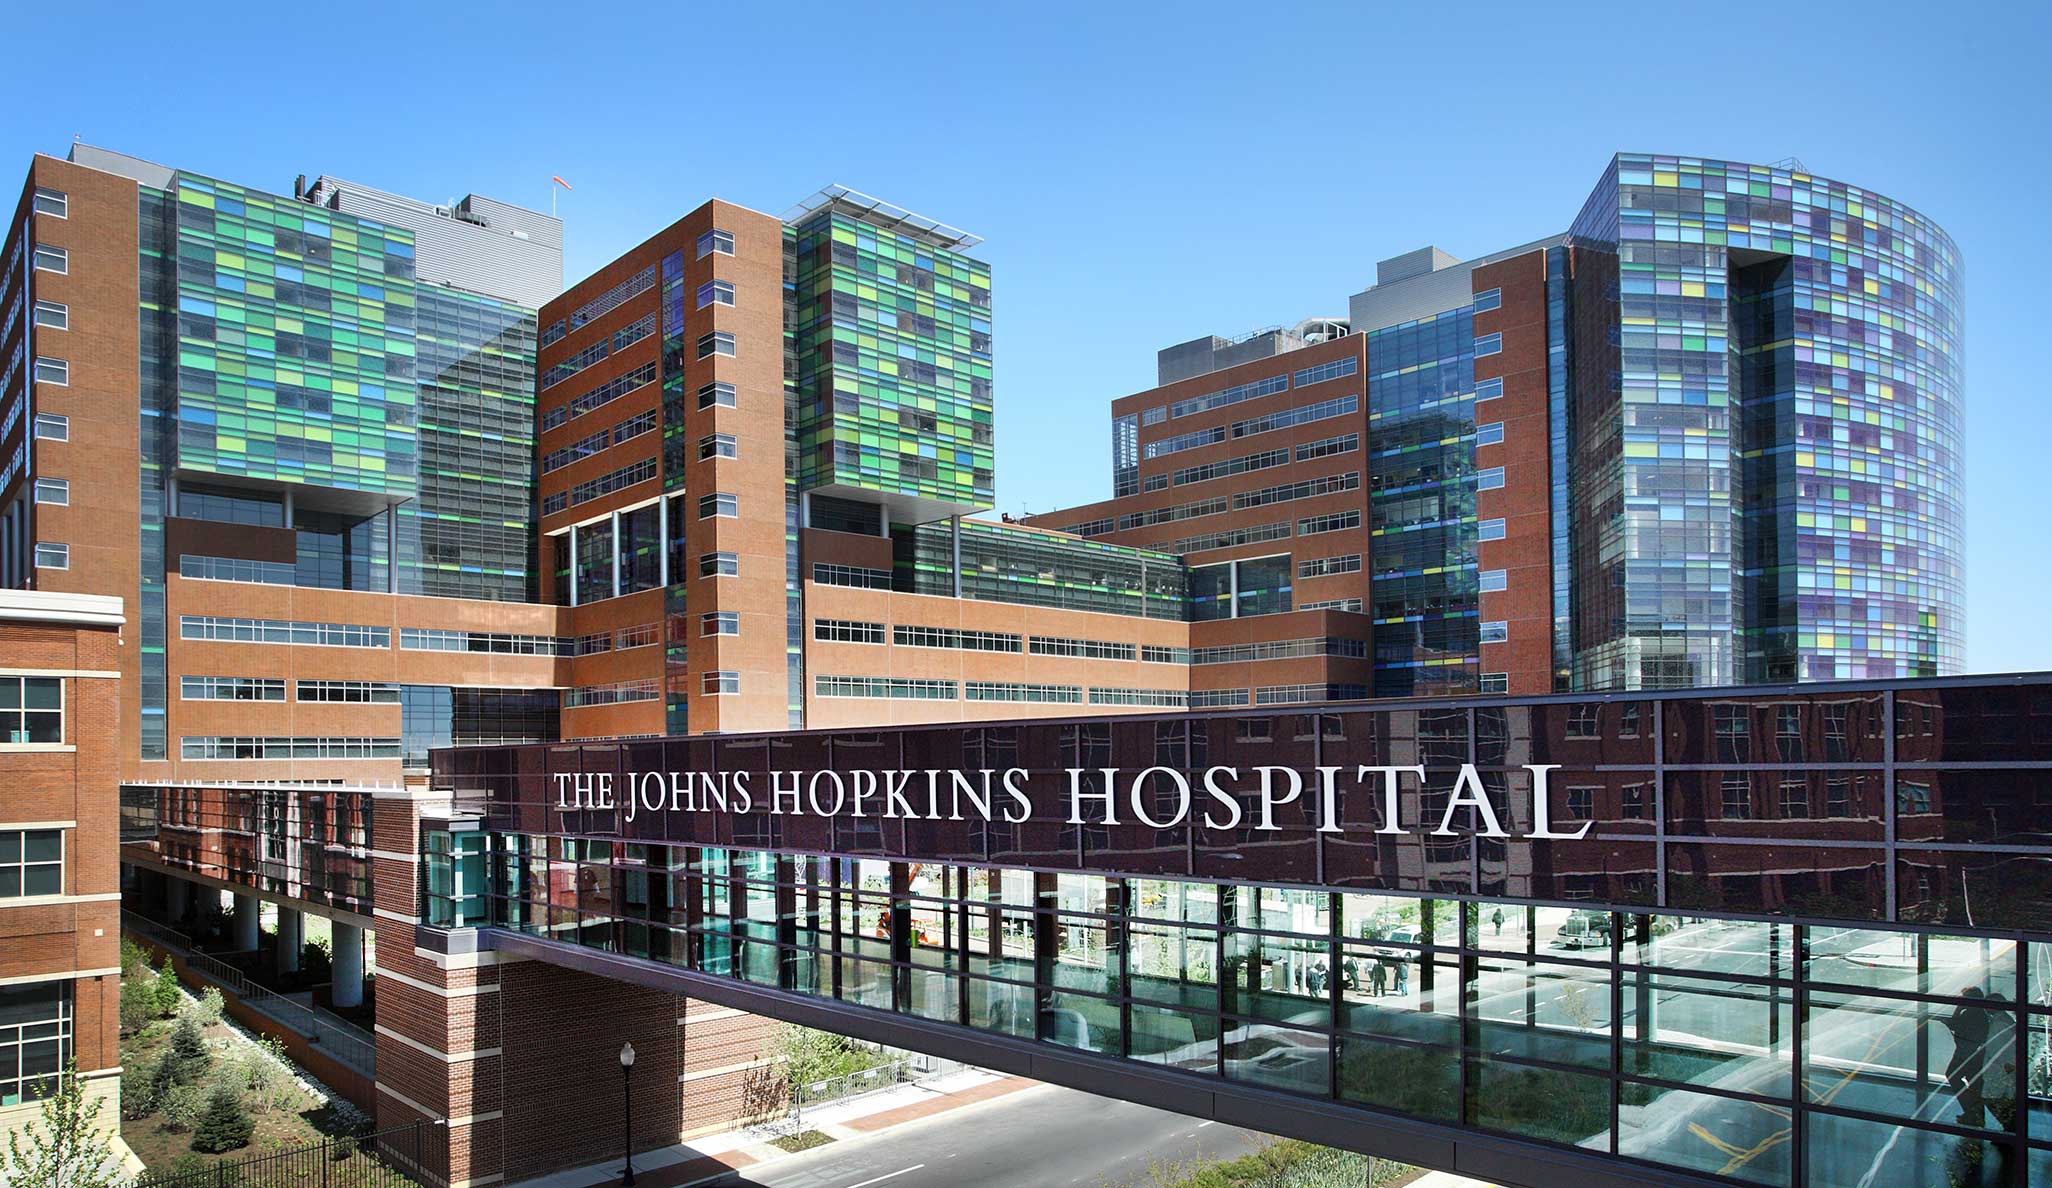 Jon Hopkins hospital